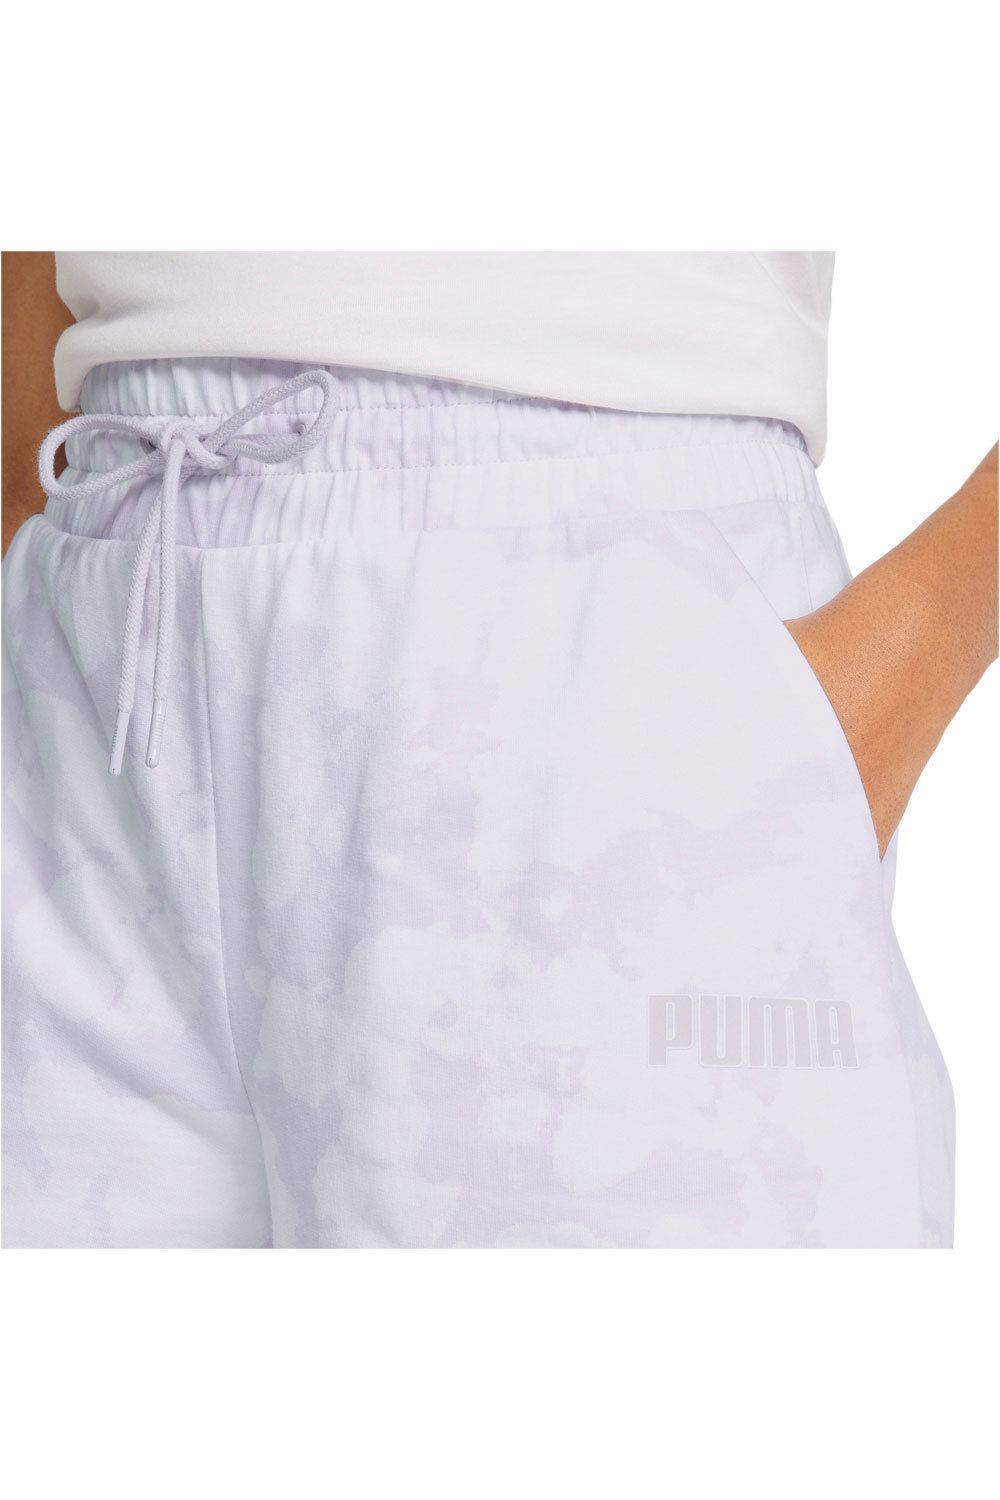 Puma pantalón corto deporte mujer Summer Graphic 7 AO vista detalle